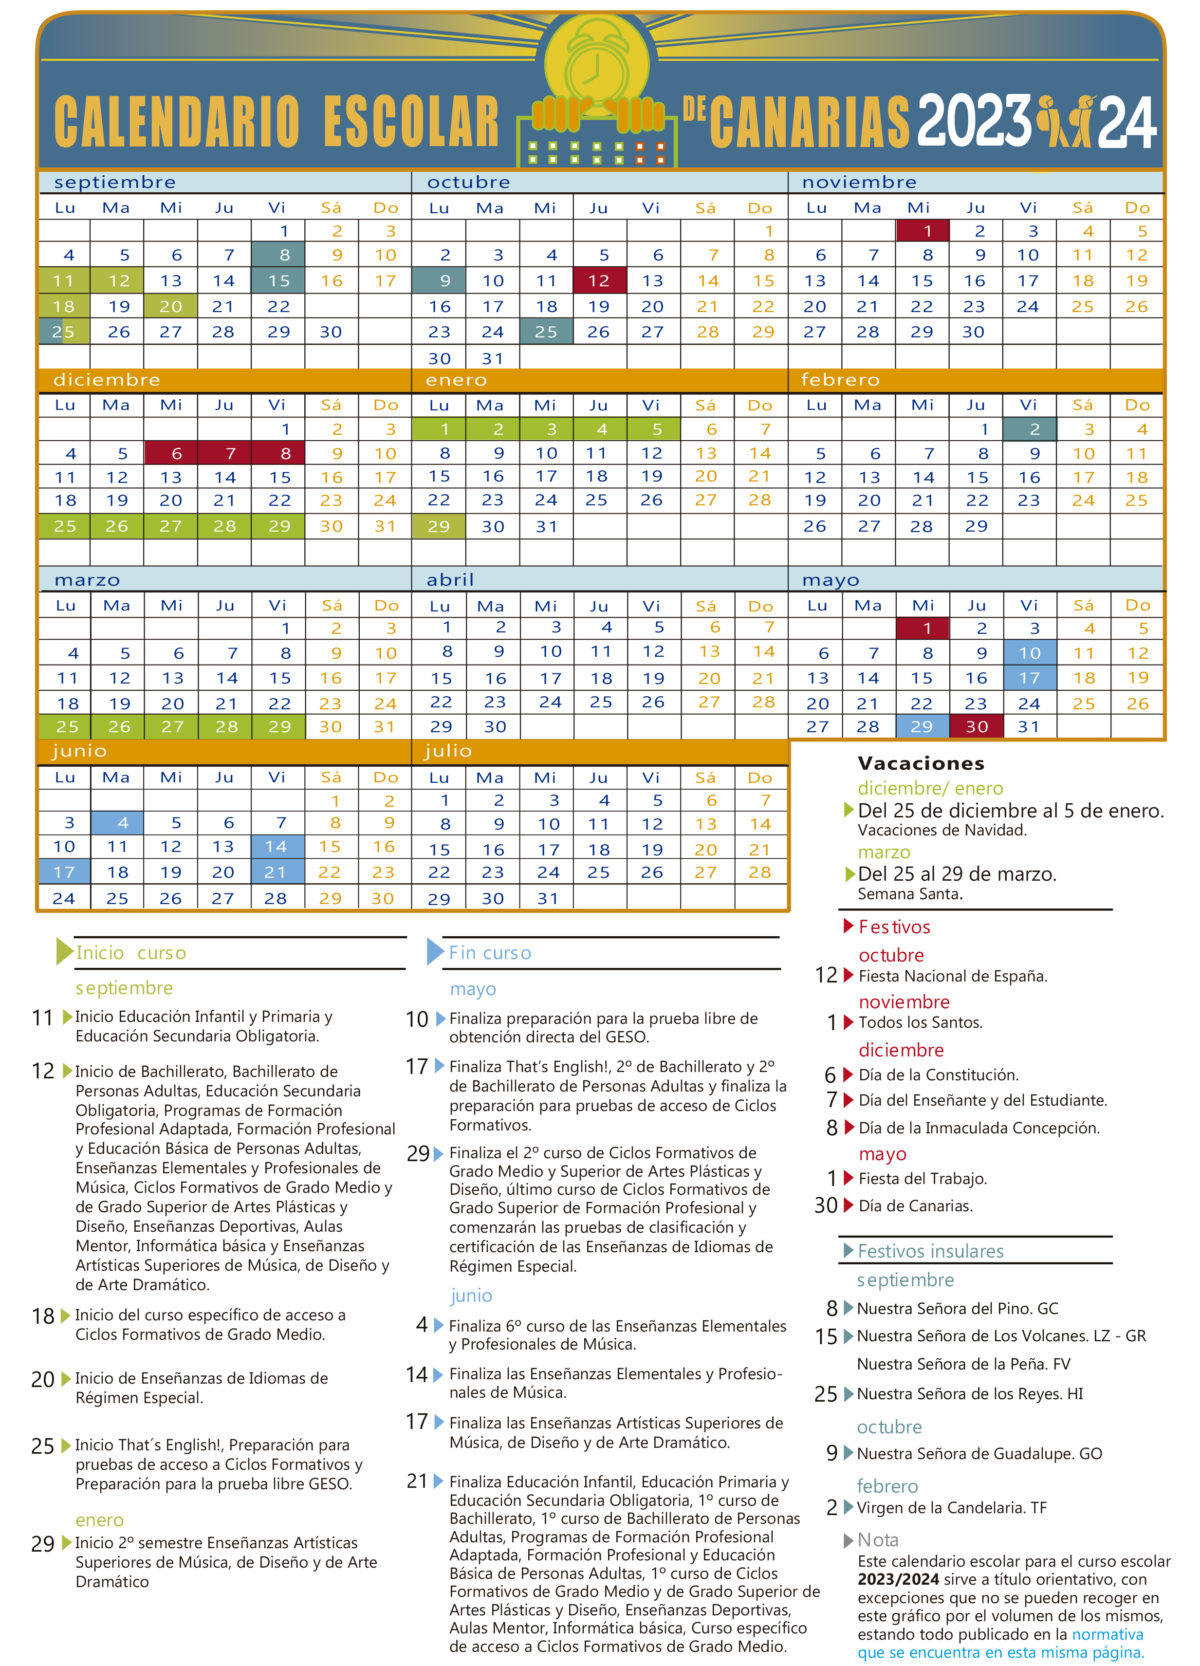 Calendario escolar para los centros de enseñanzas no universitarias